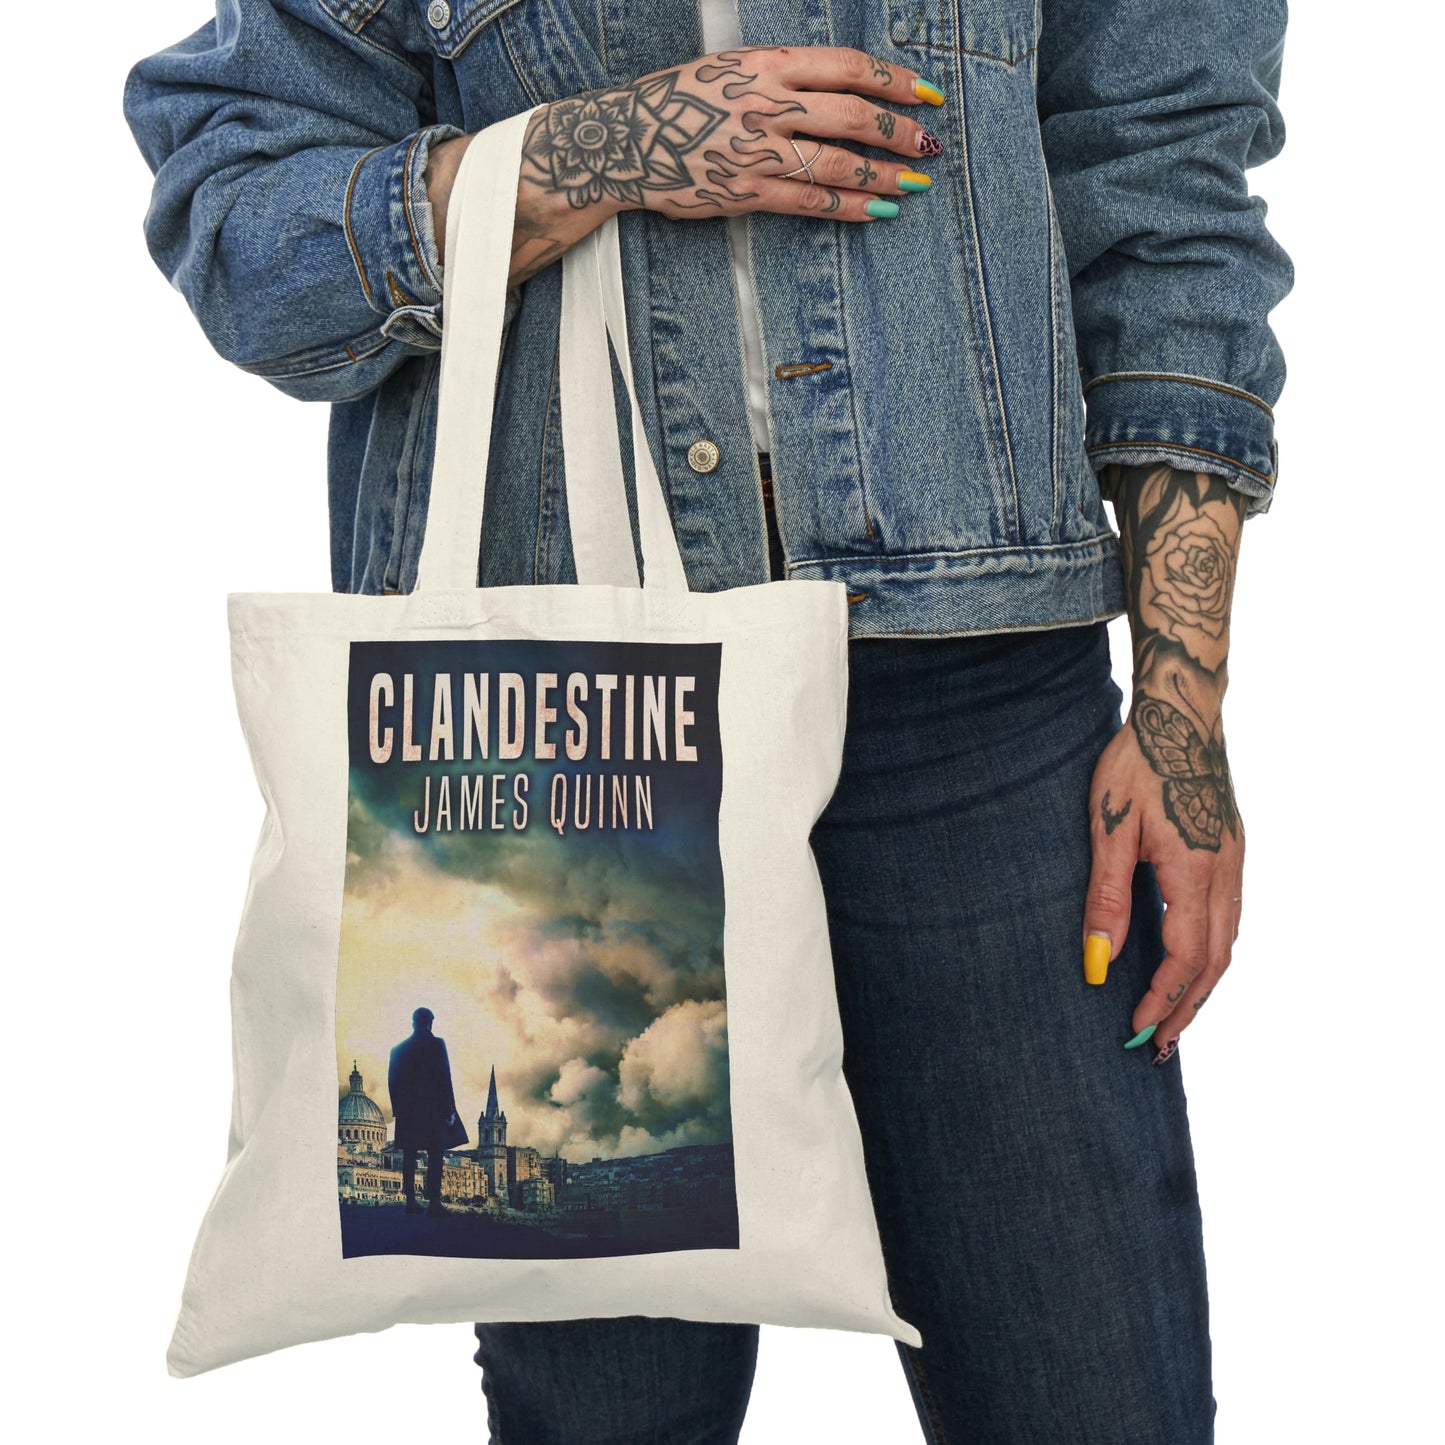 Clandestine - Natural Tote Bag